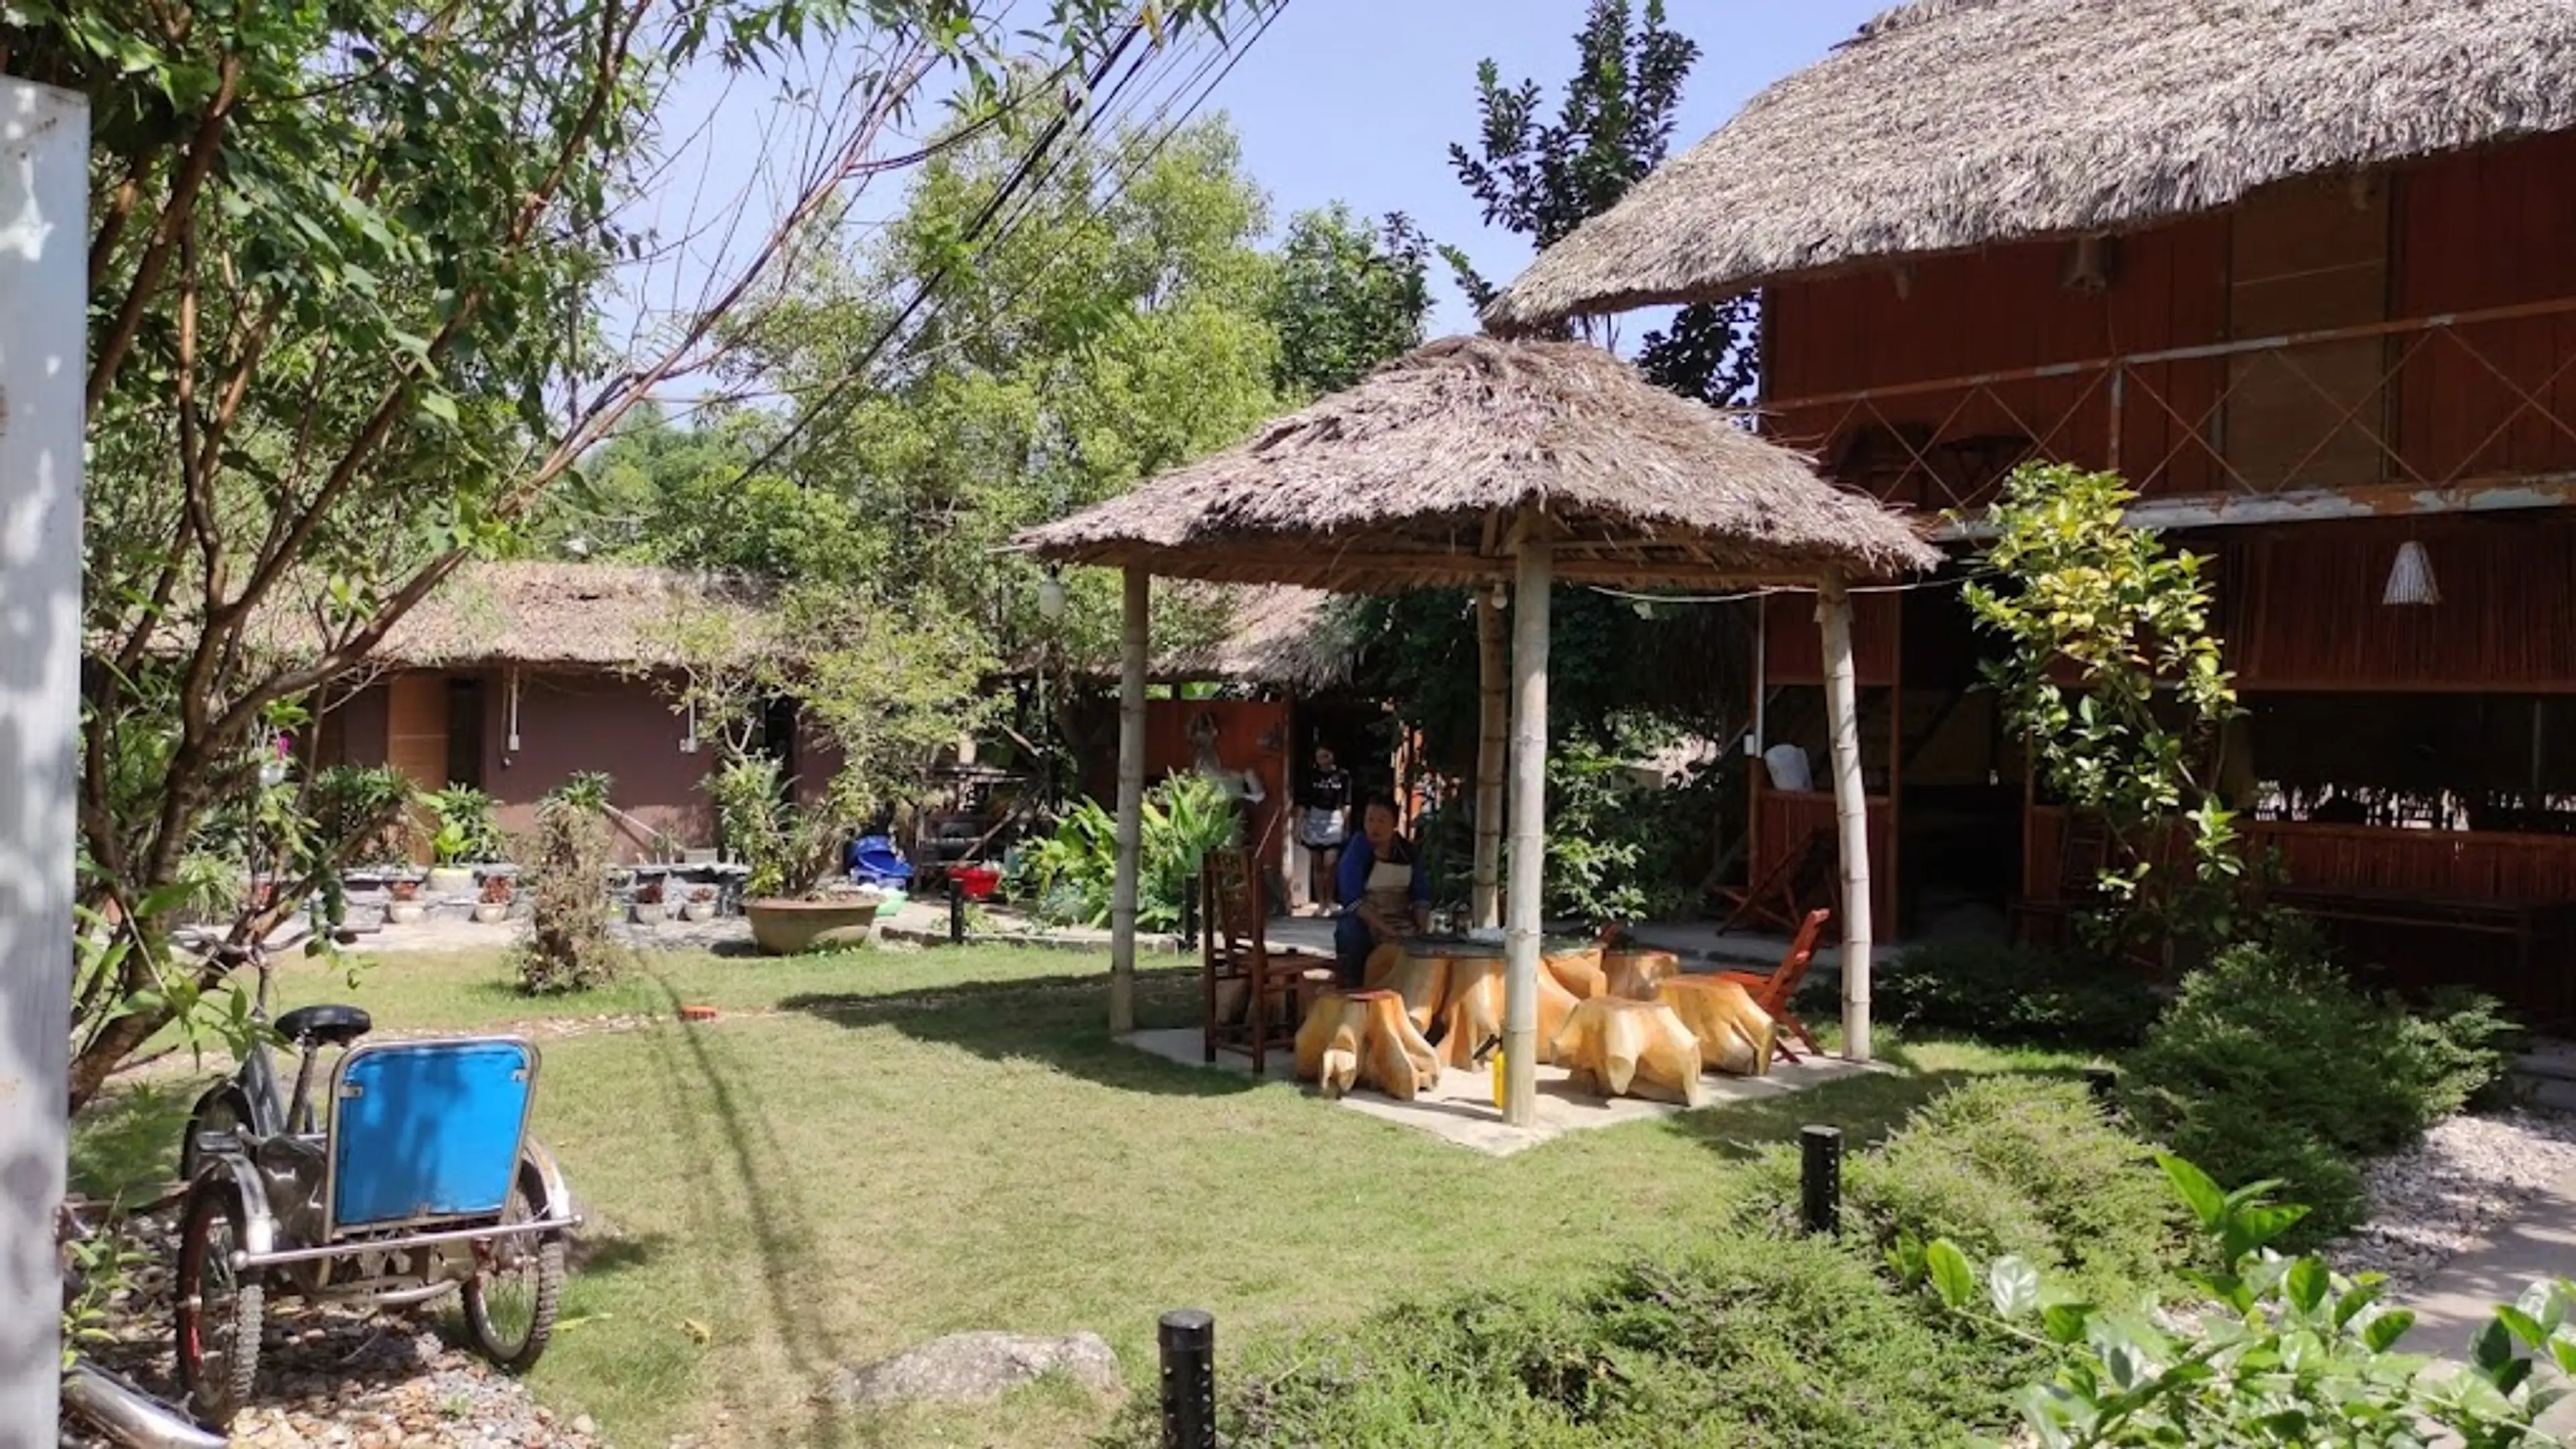 Thon Tha Village